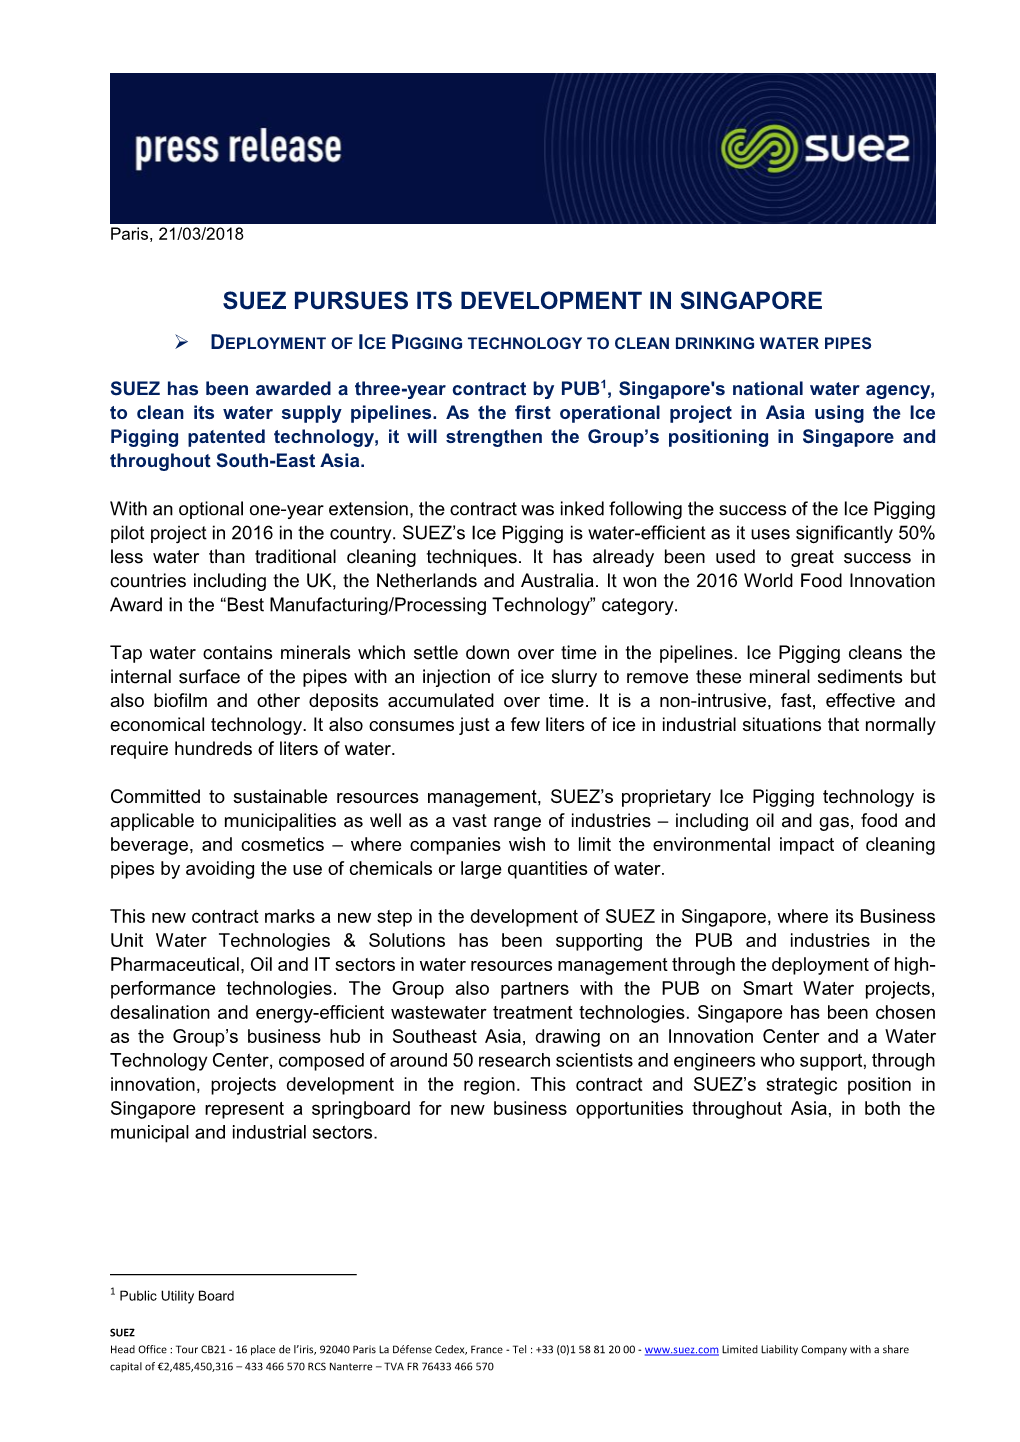 Suez Pursues Its Development in Singapore